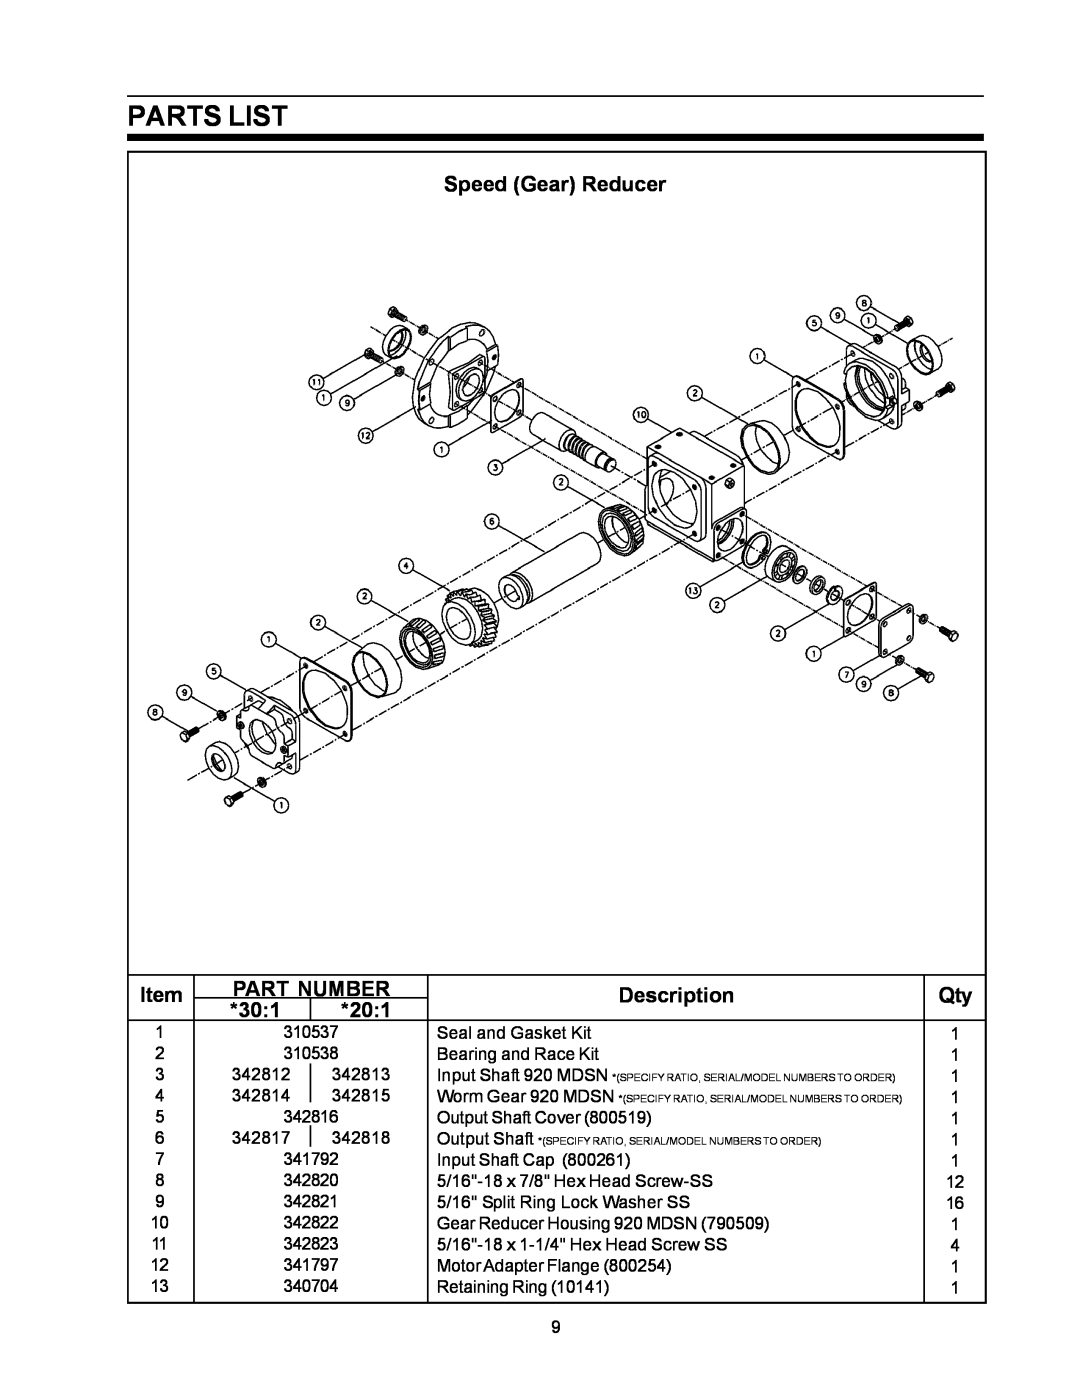 SeaLand Vacuum Pump owner manual Parts List, Speed Gear Reducer, Part Number, Description 